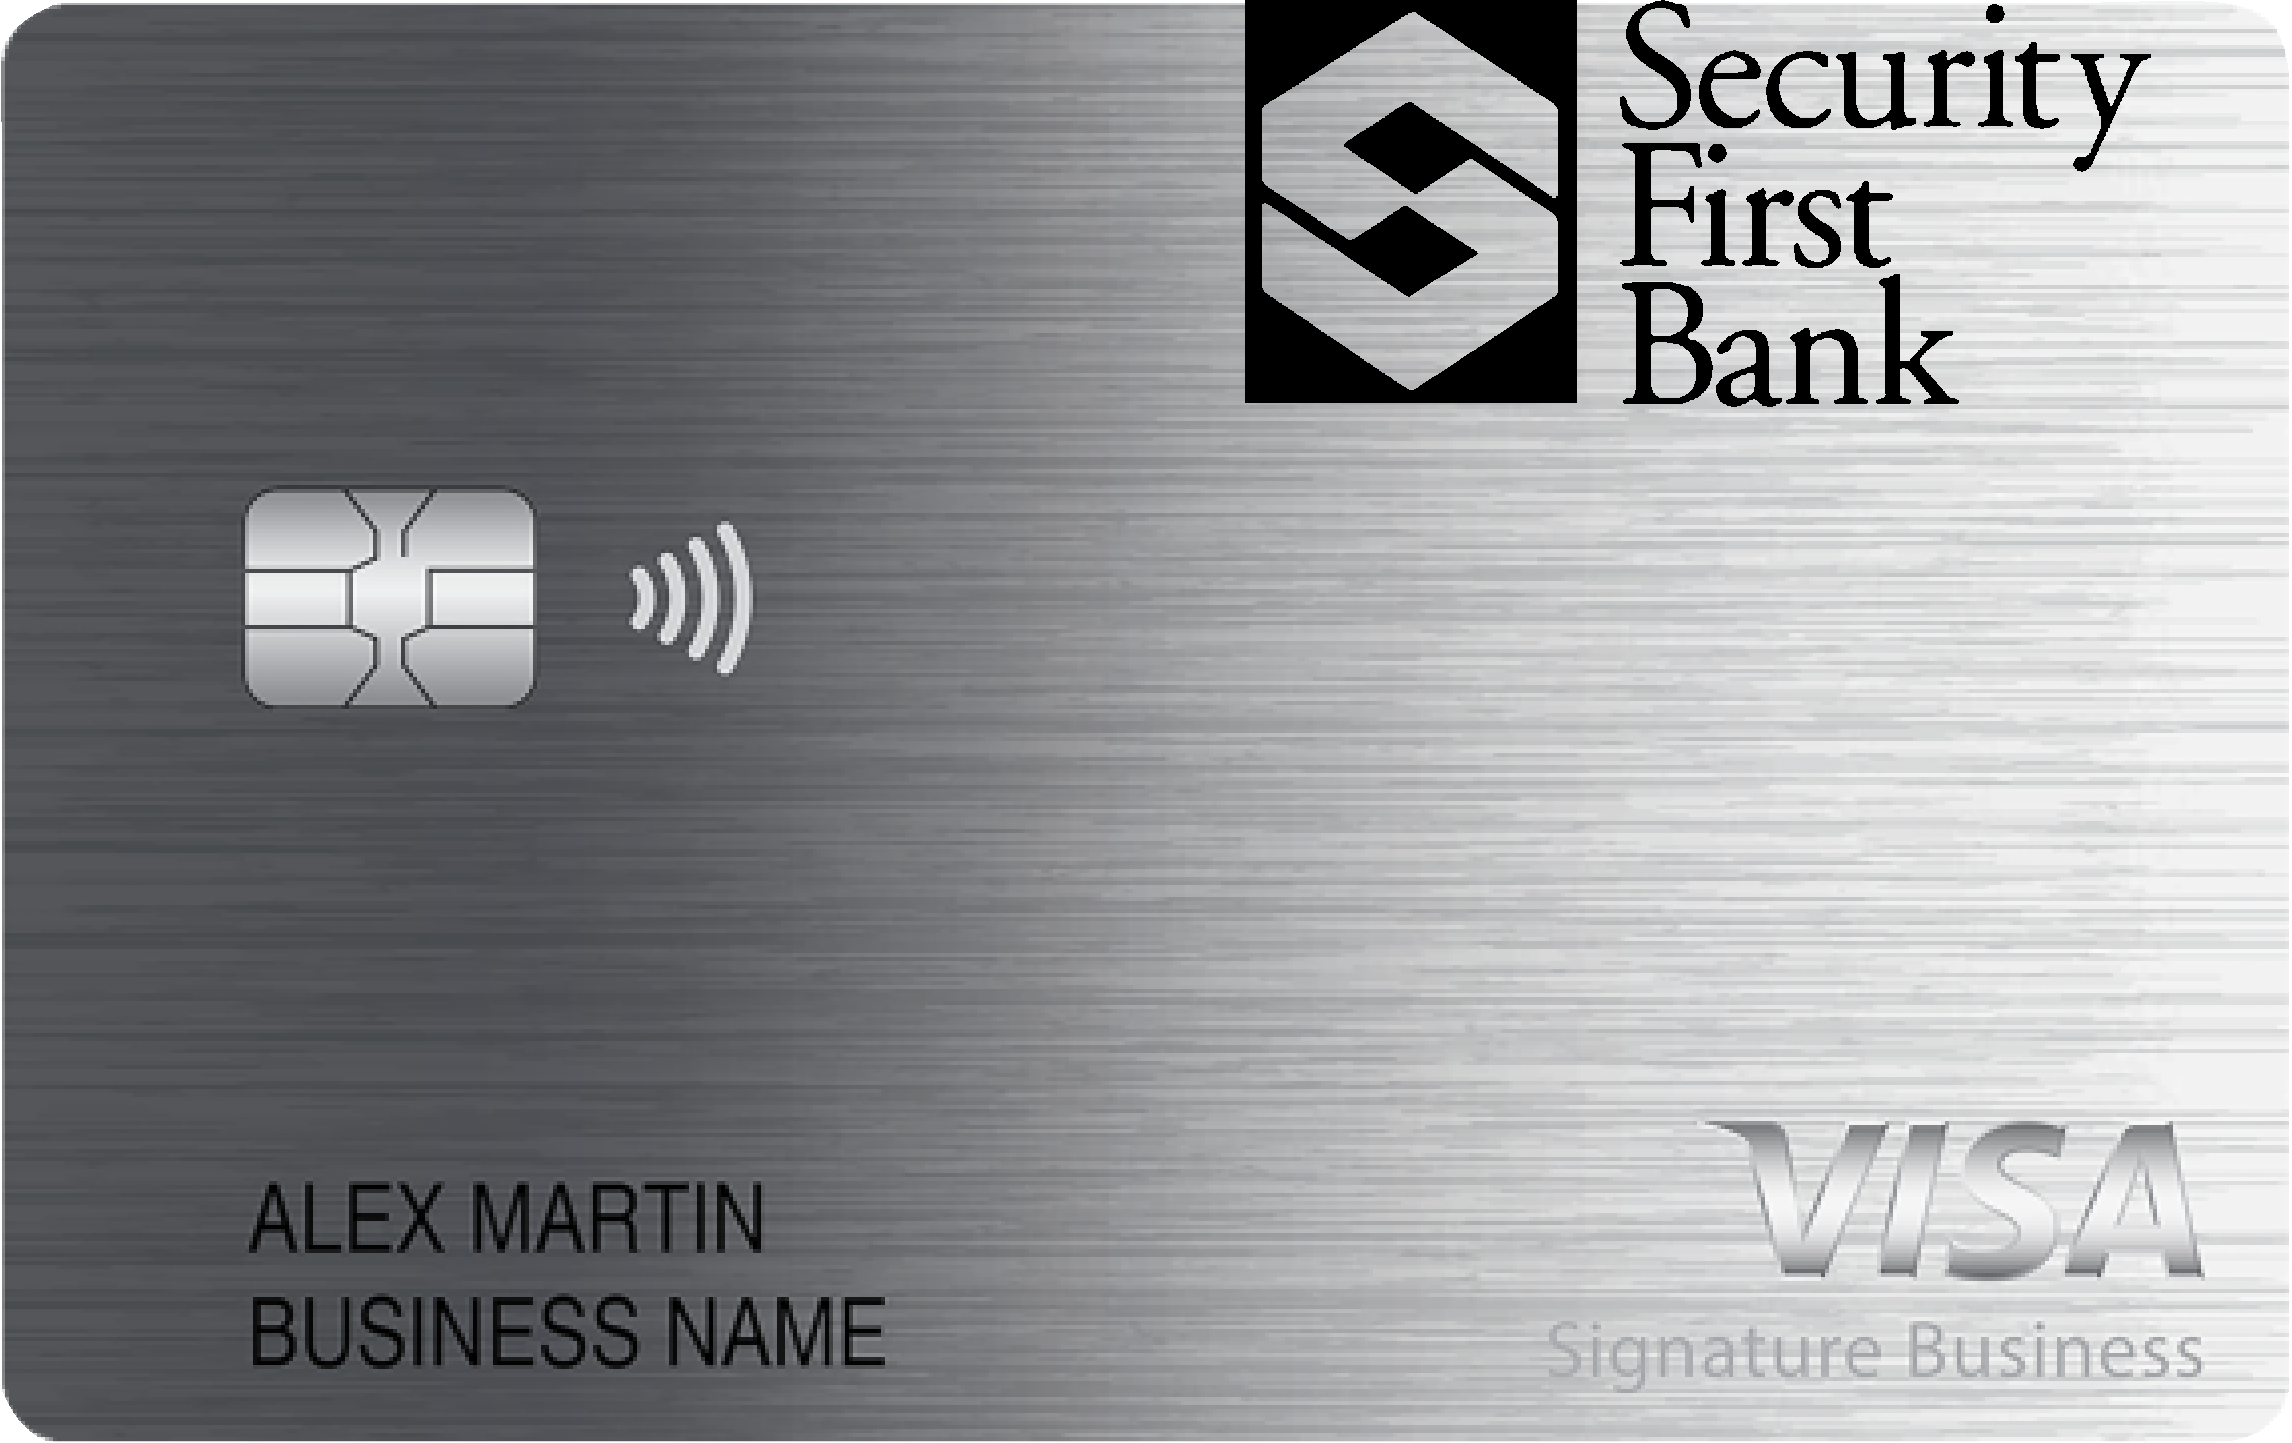 Security First Bank Smart Business Rewards Card